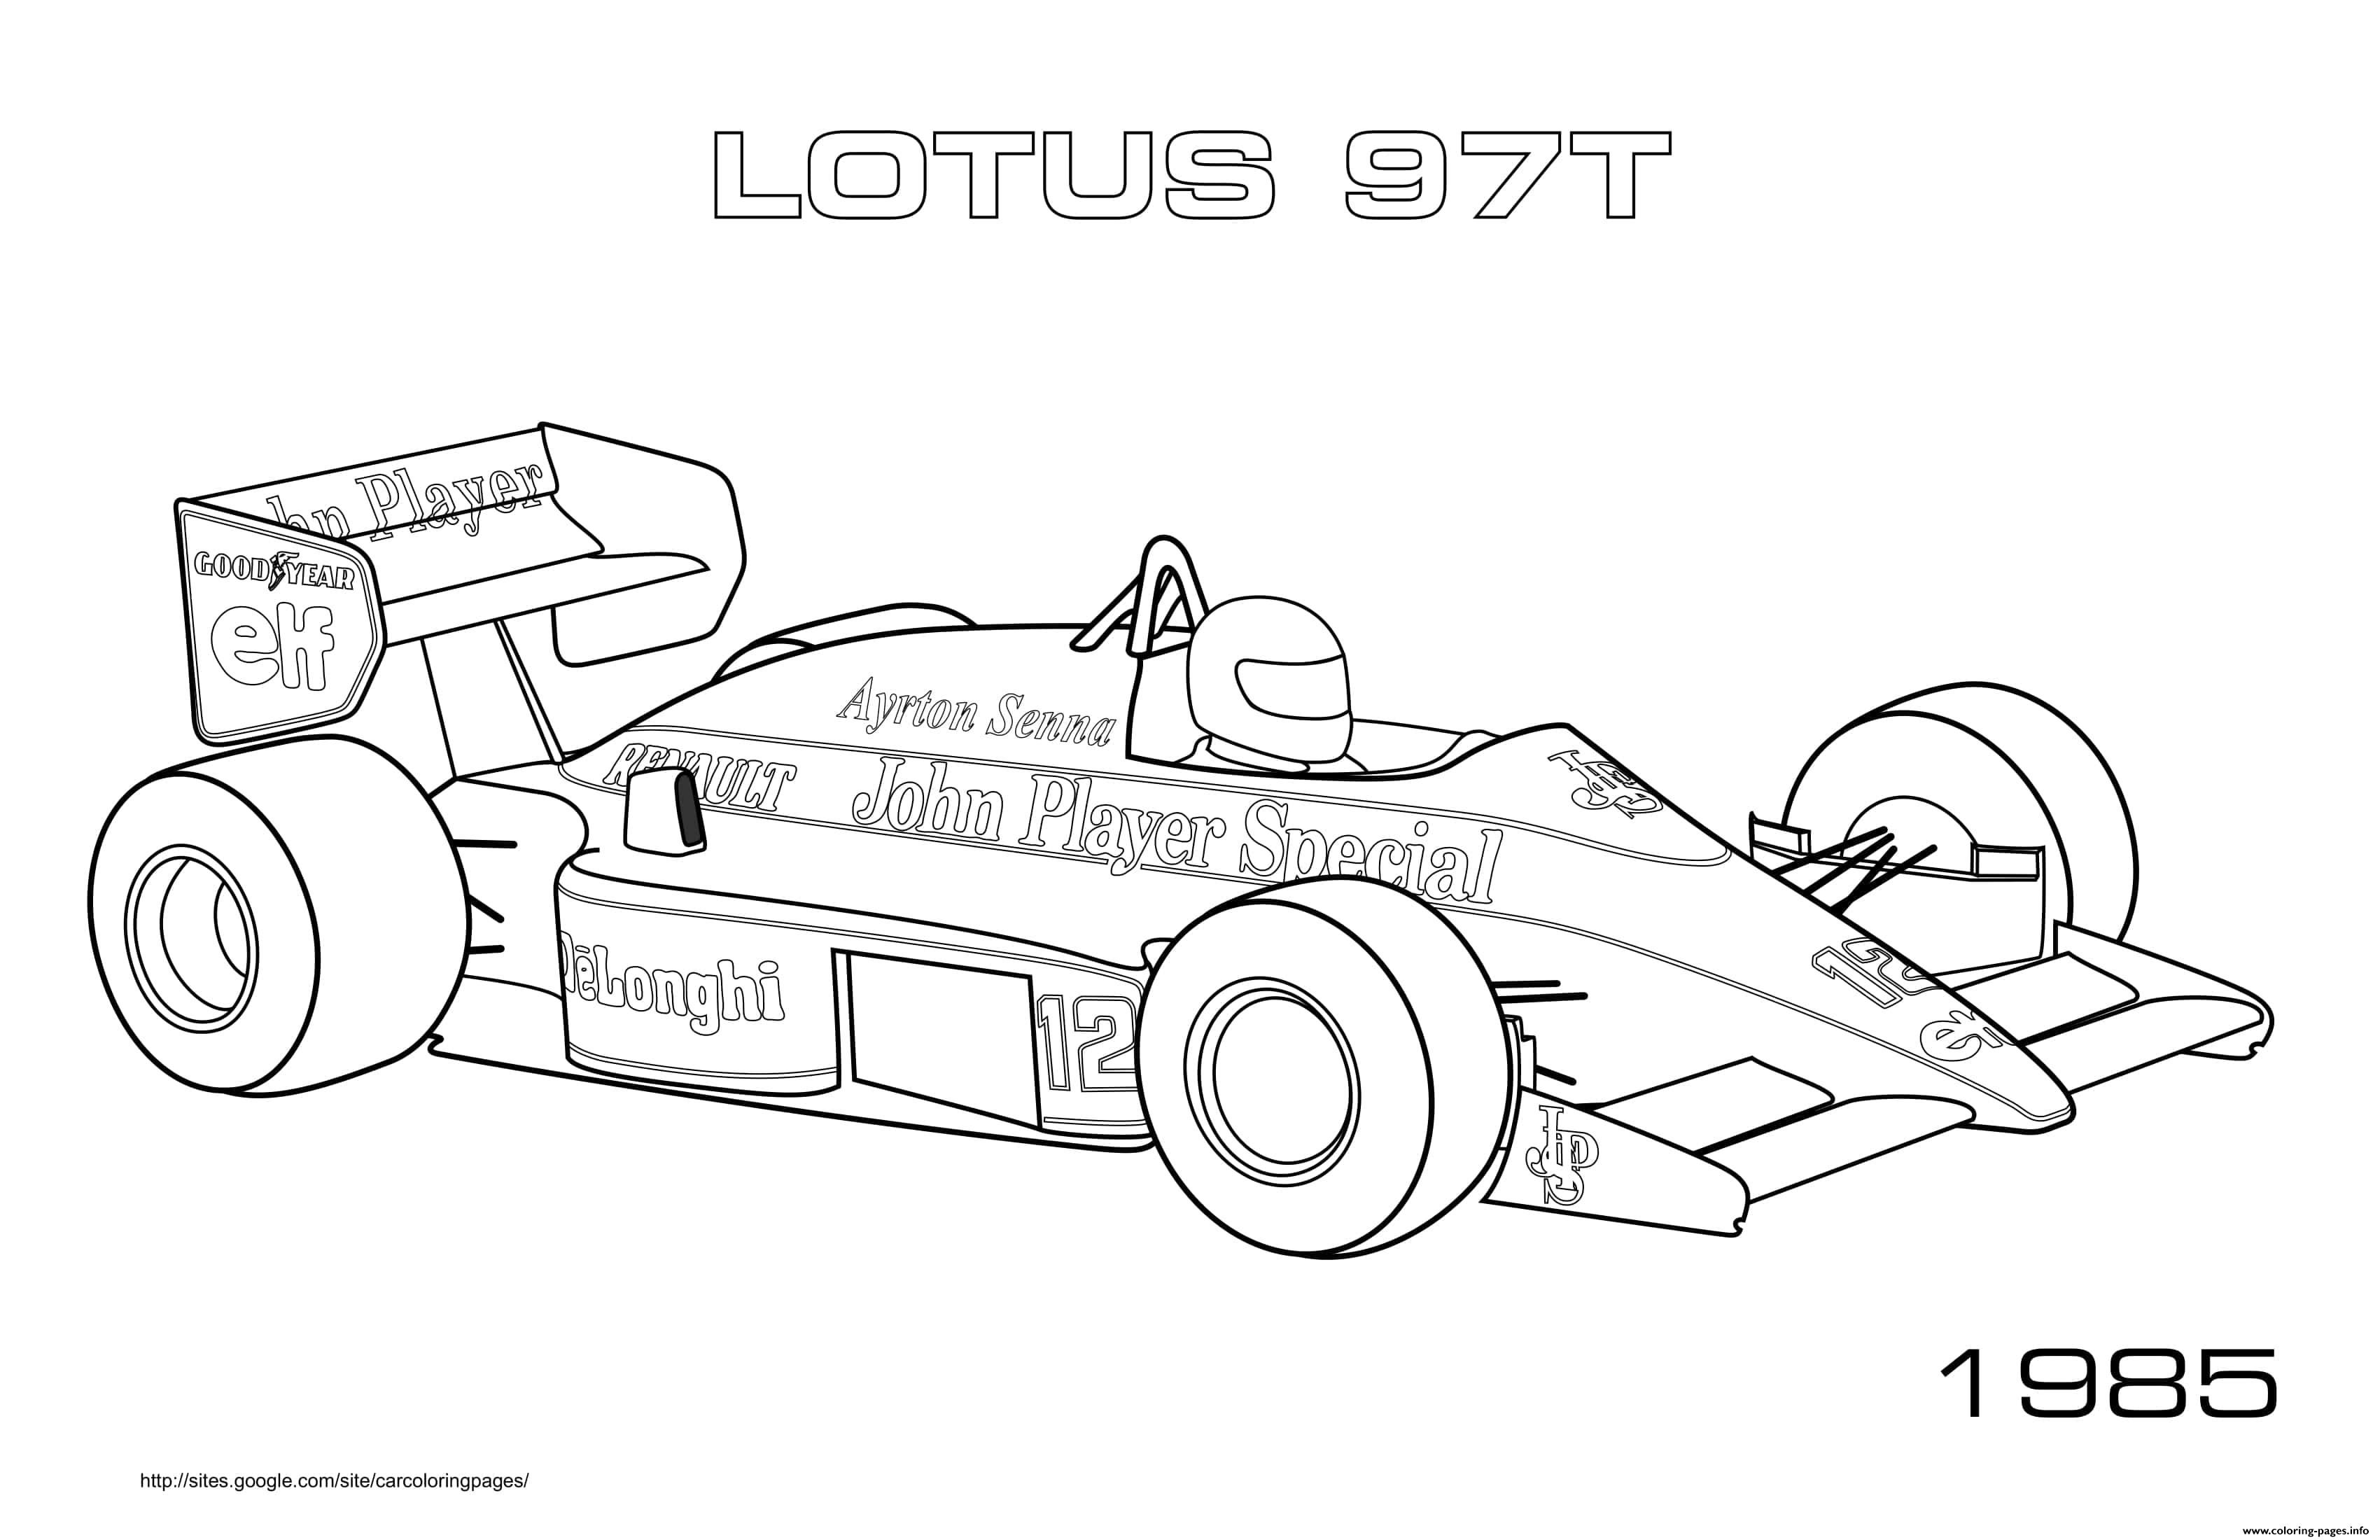 F1 Lotus 97t 1985 coloring